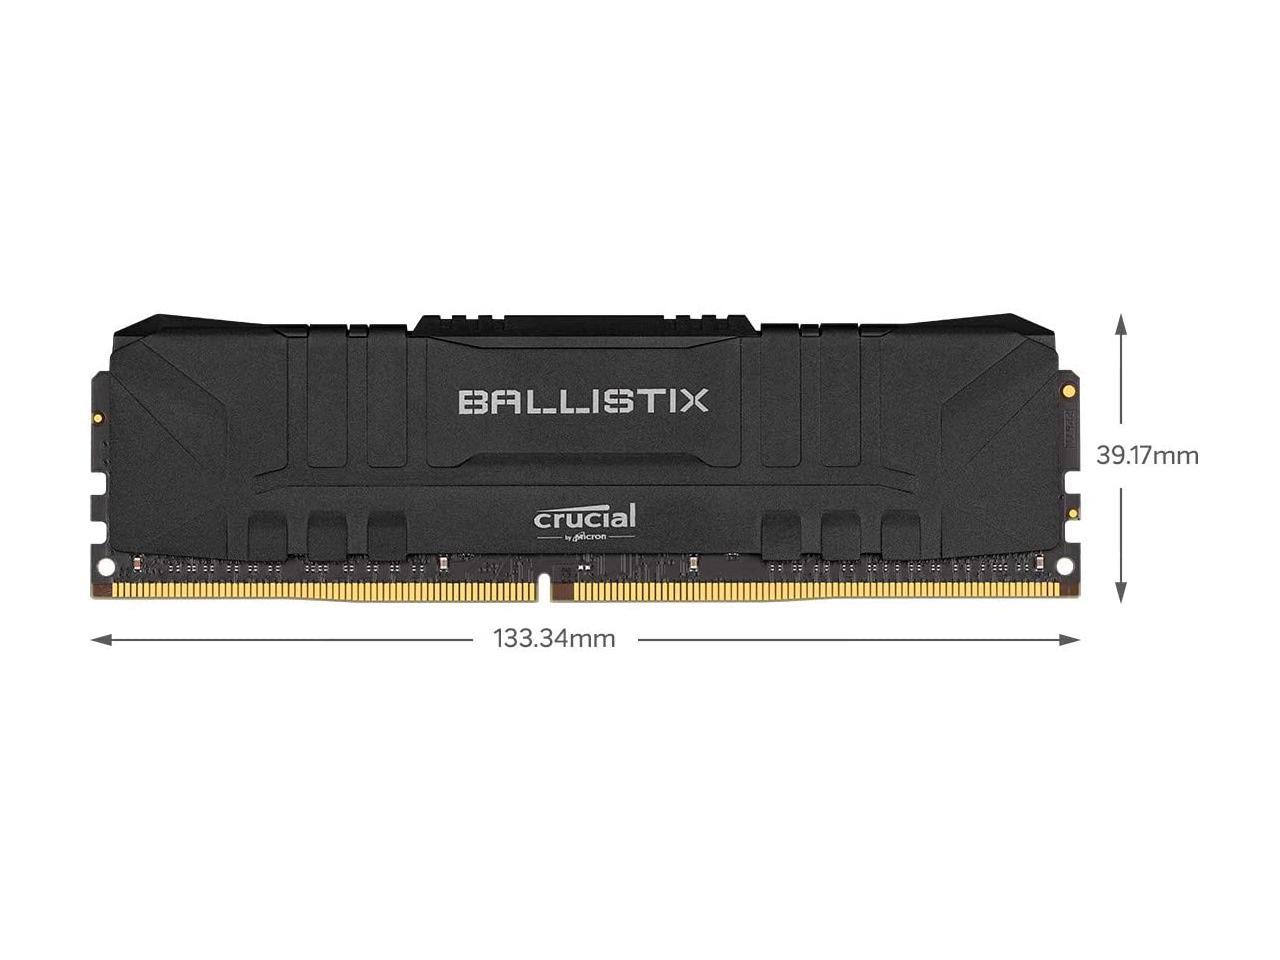 Crucial Ballistix 3600 MHz DDR4 DRAM Desktop Gaming Memory Kit 16GB